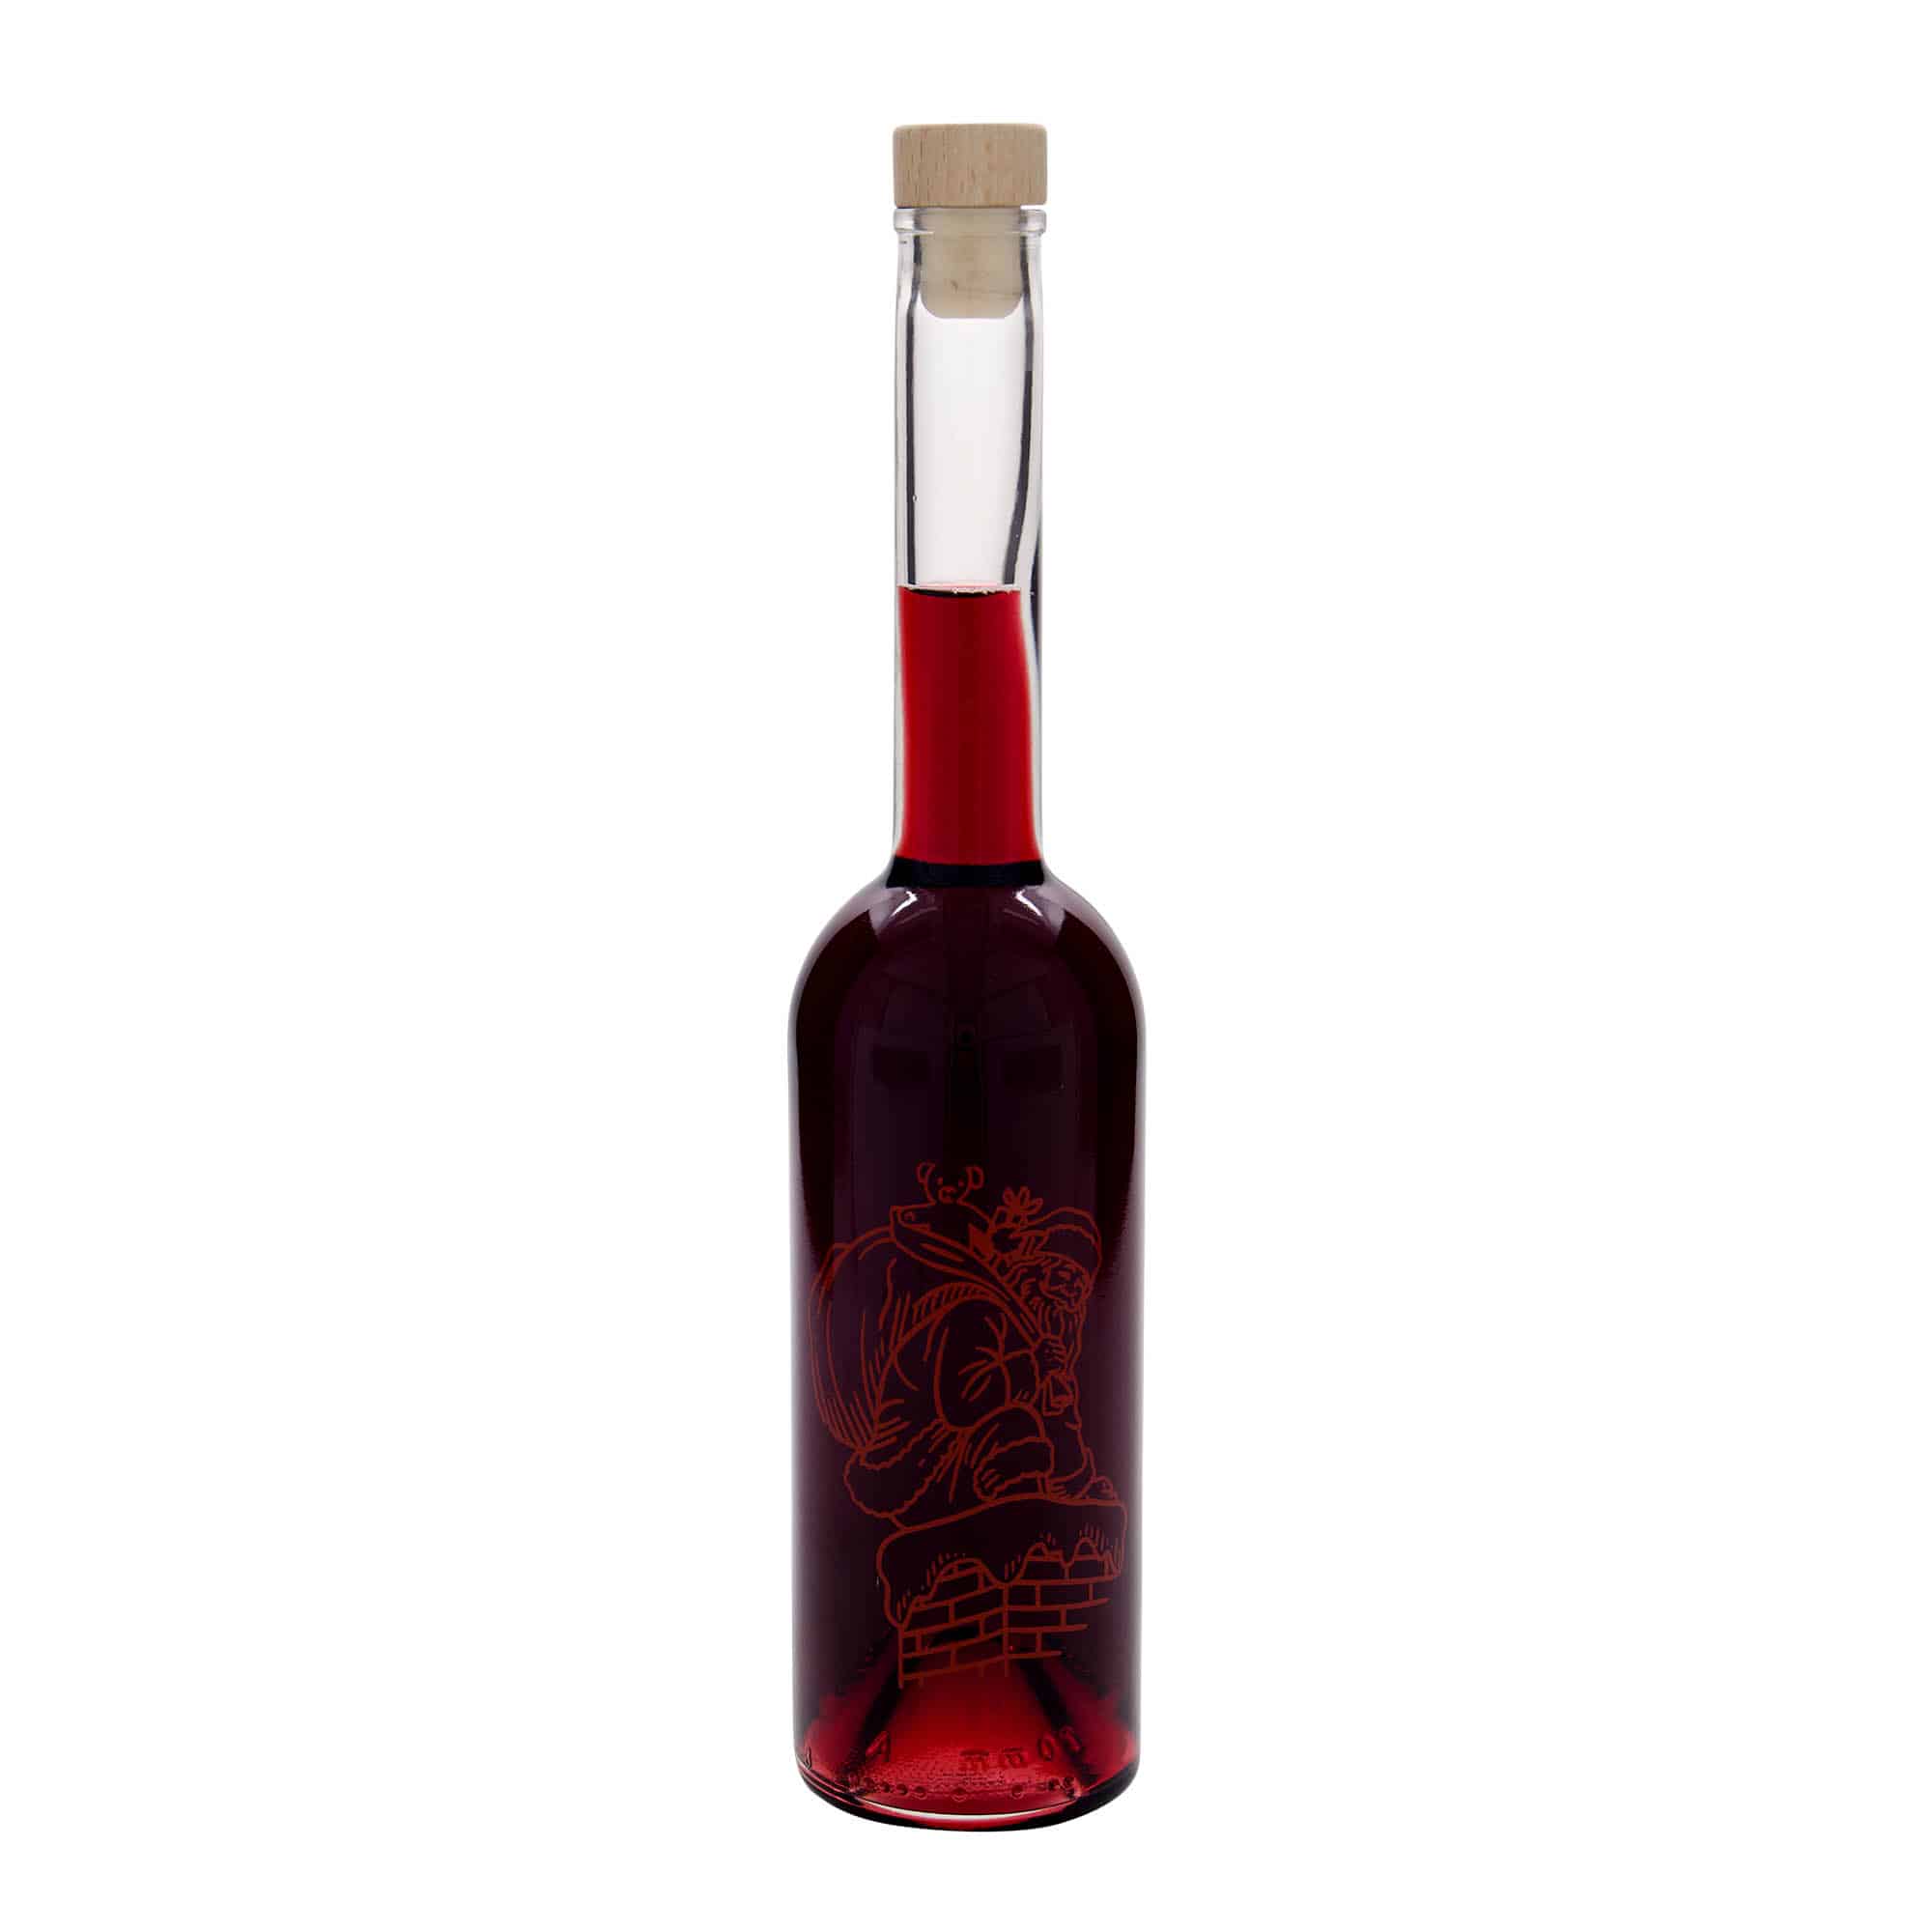 500 ml glass bottle 'Opera', print: gifts, closure: cork